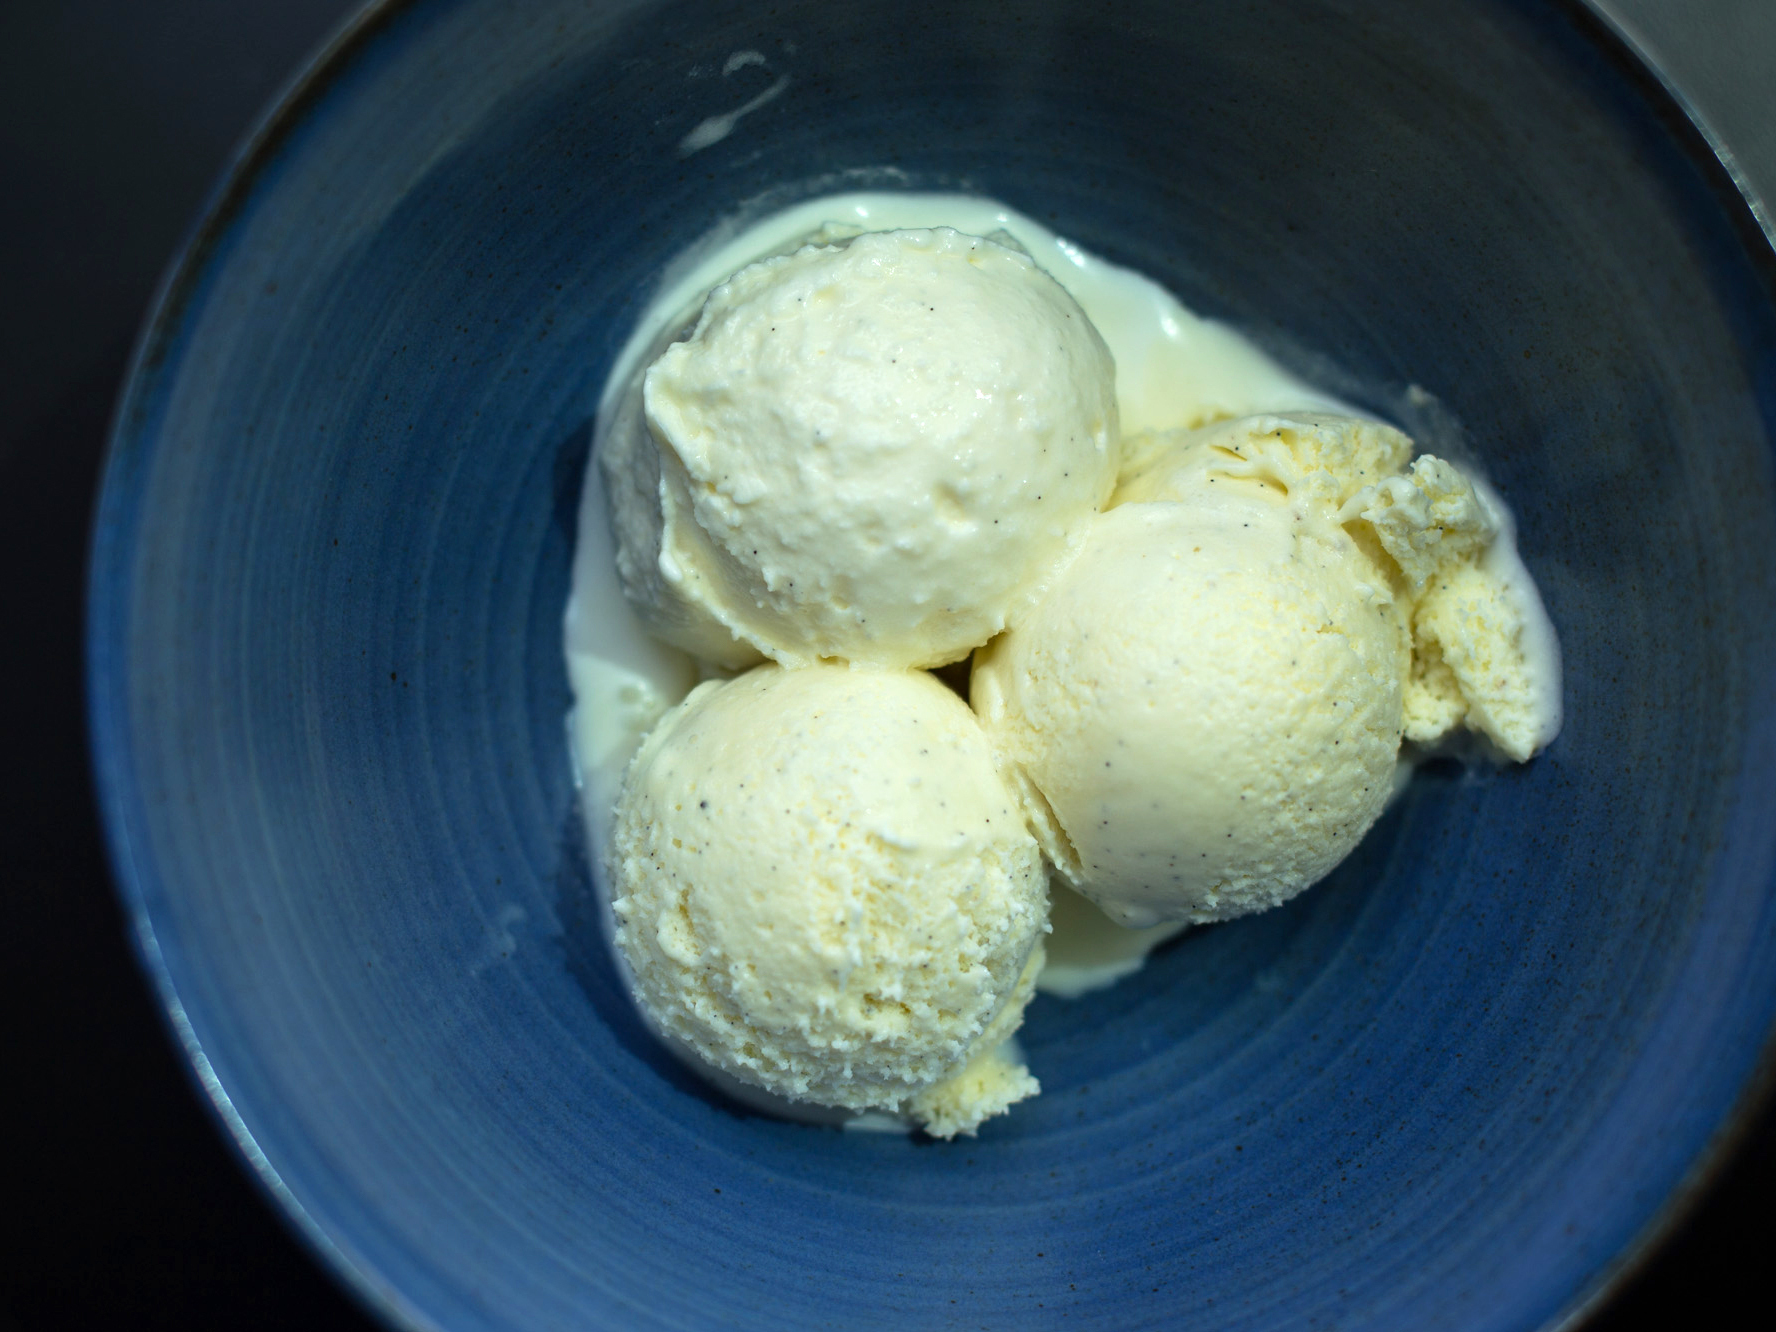 Three scoops of vanilla ice cream made with vanilla beans from Mexico, Tahiti and Madagascar. Photo: Meredith Rizzo/NPR